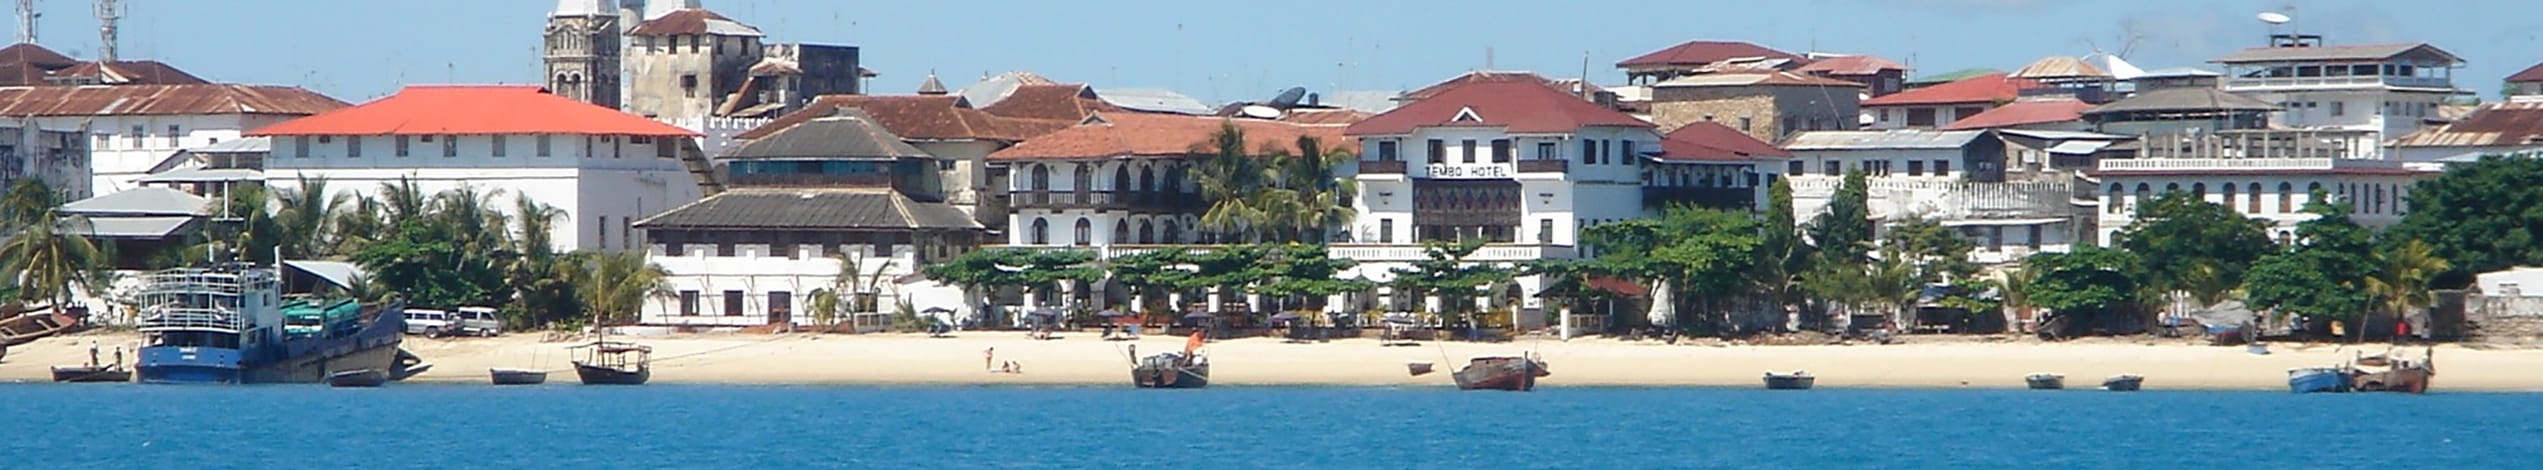 Rundt på Zanzibar